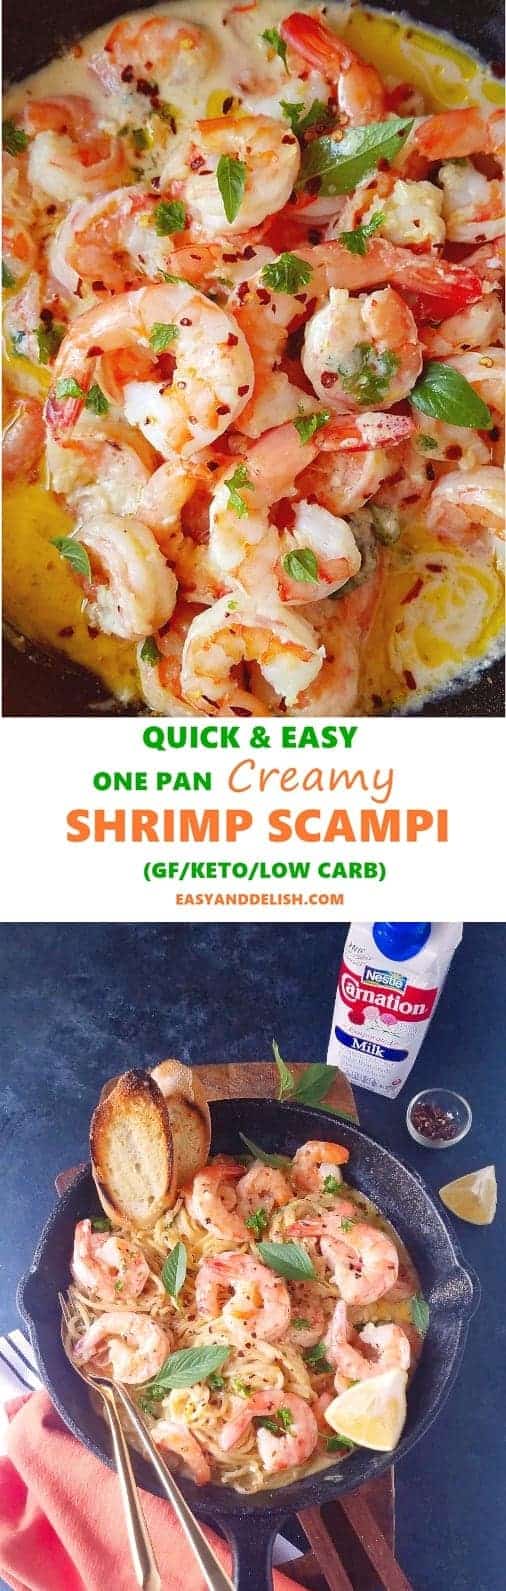 One Pan Creamy Shrimp Scampi Recipe - Easy and Delish